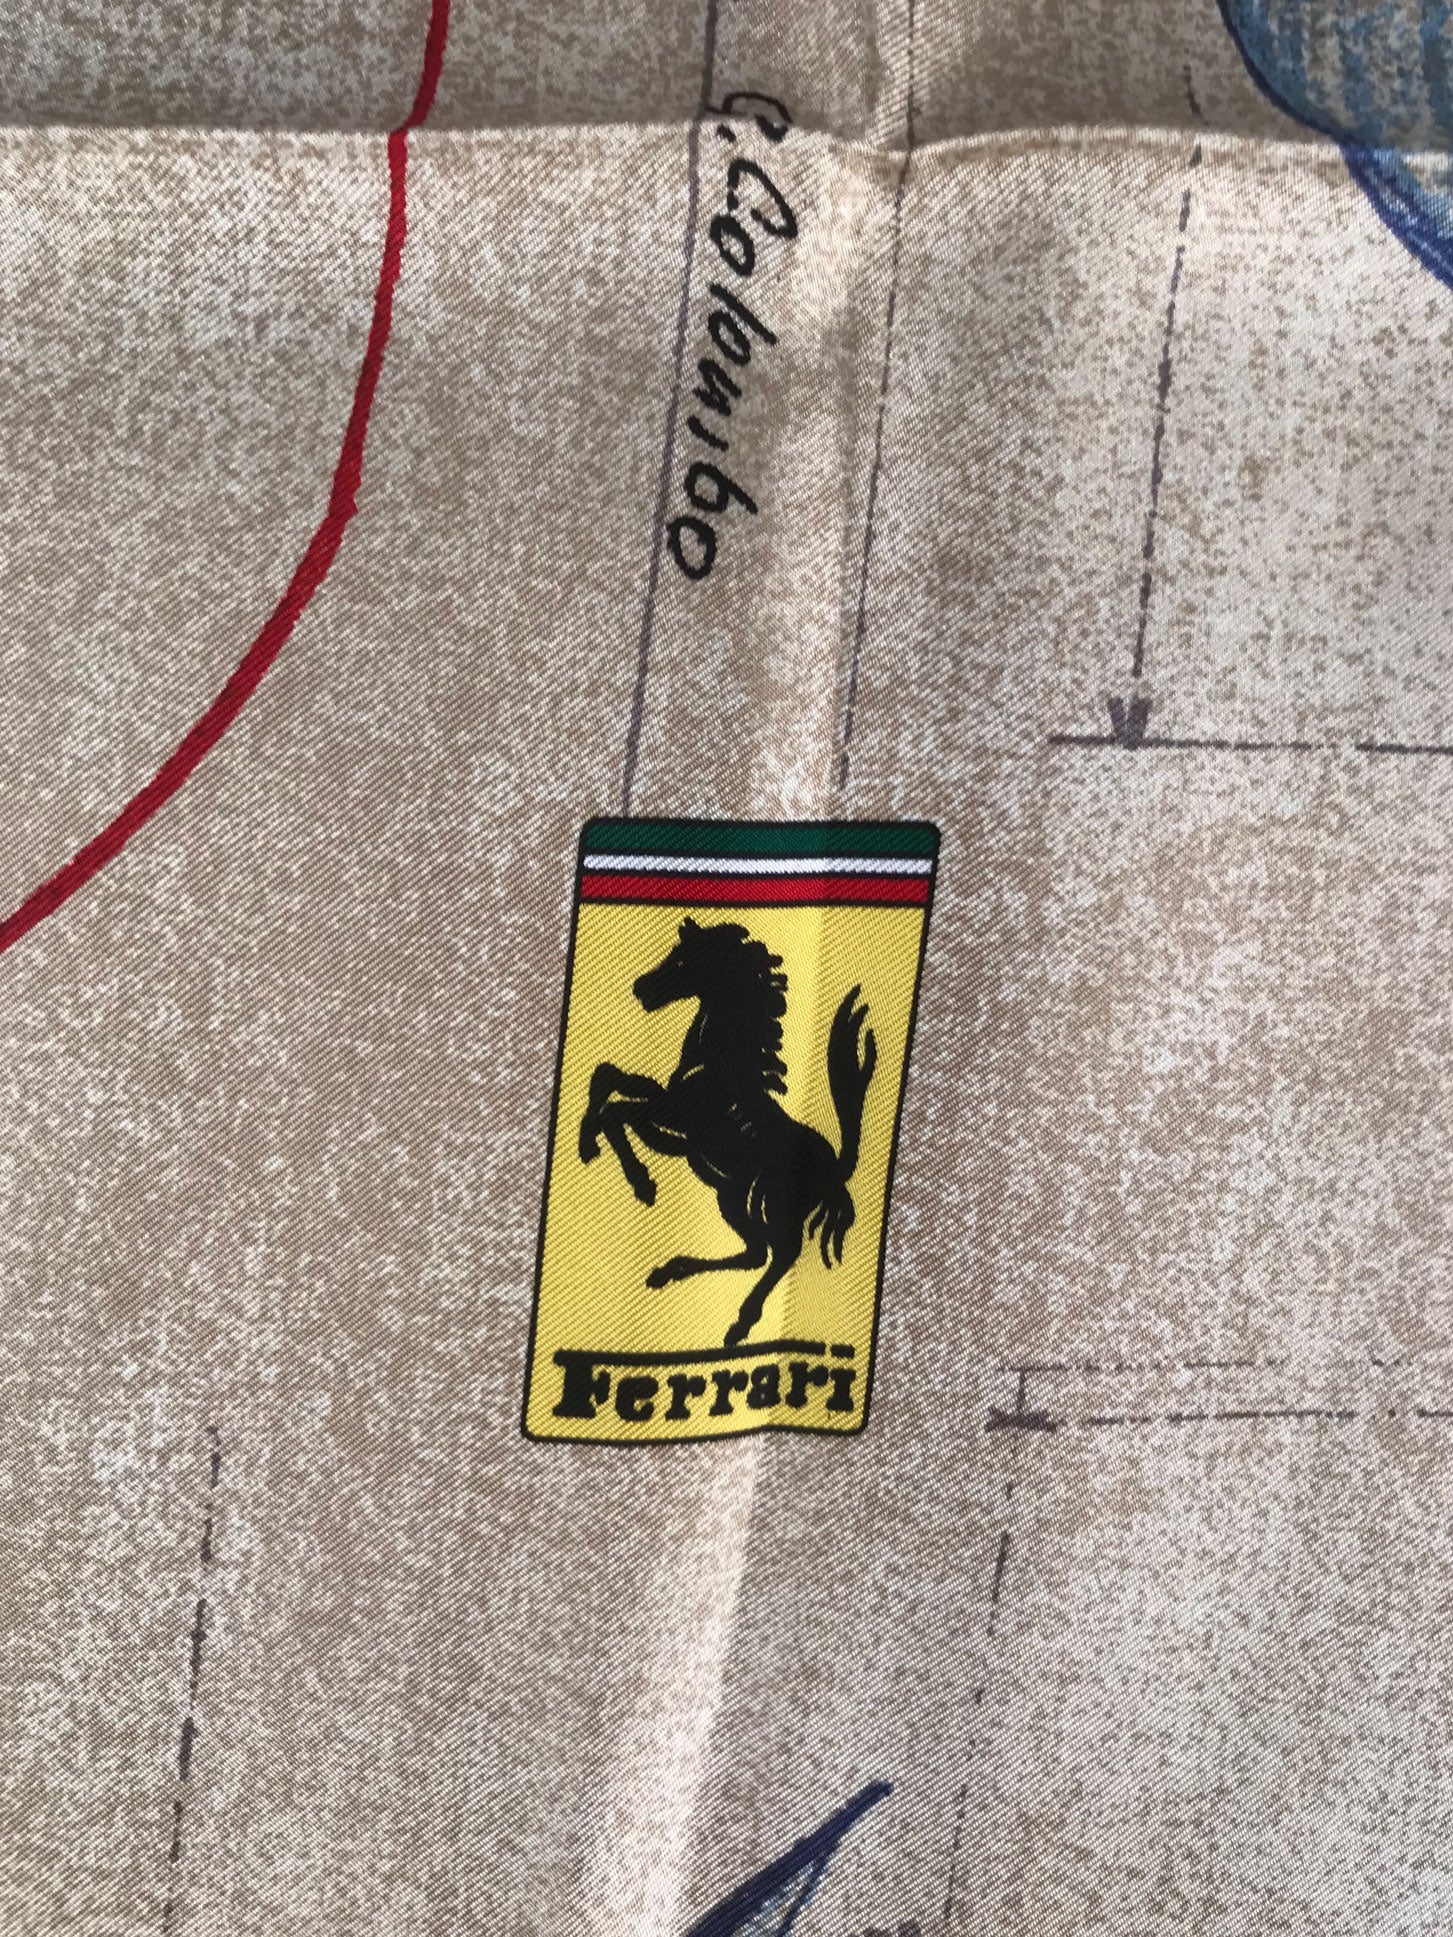 Ferrari 125 S factory silk scarf - l'art et l'automobile